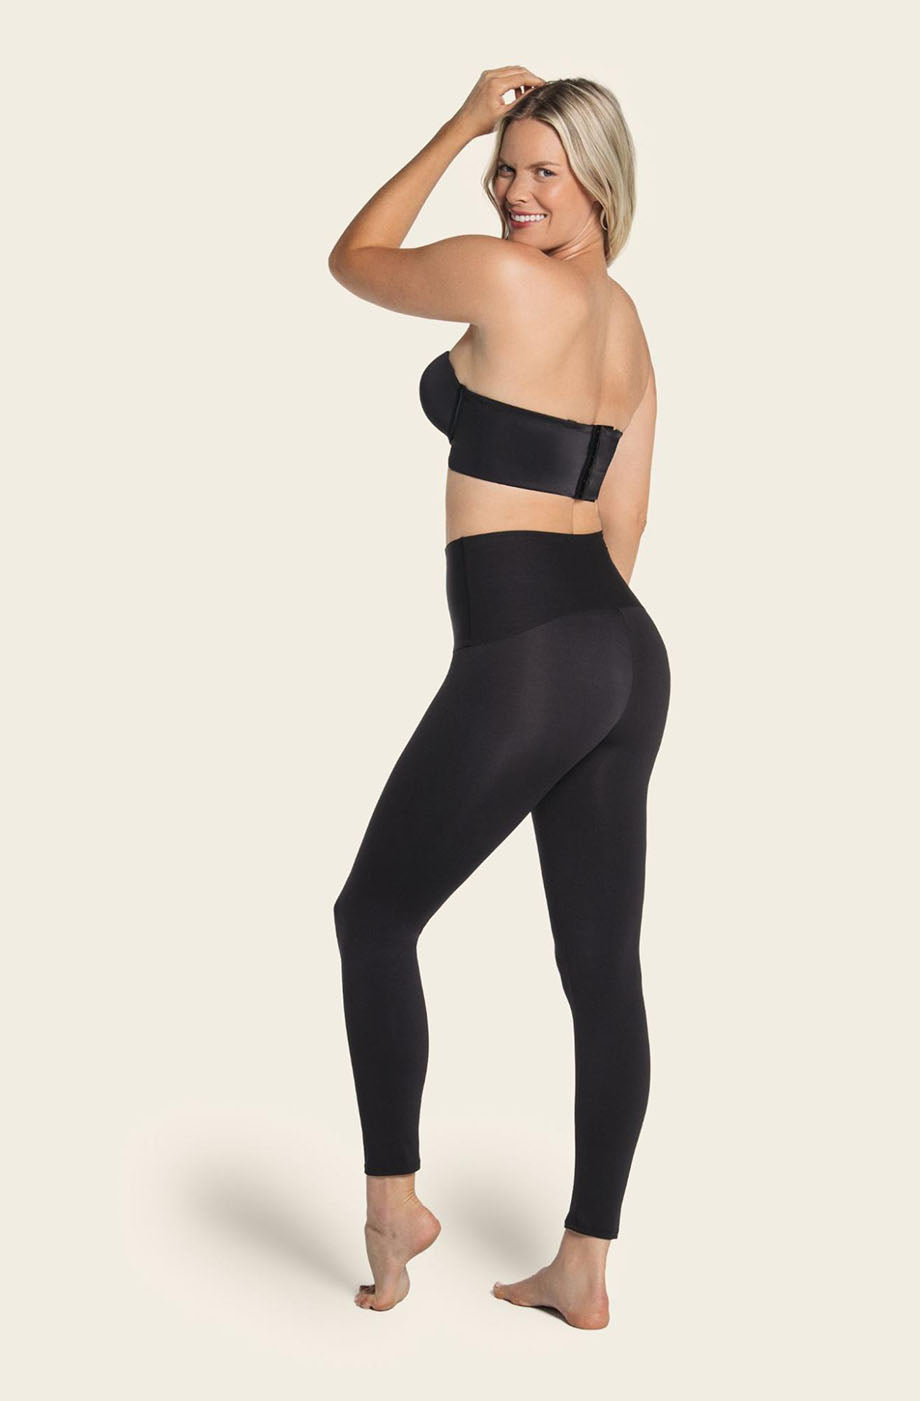 Moderate shaper legging featuring aloe vera fabric